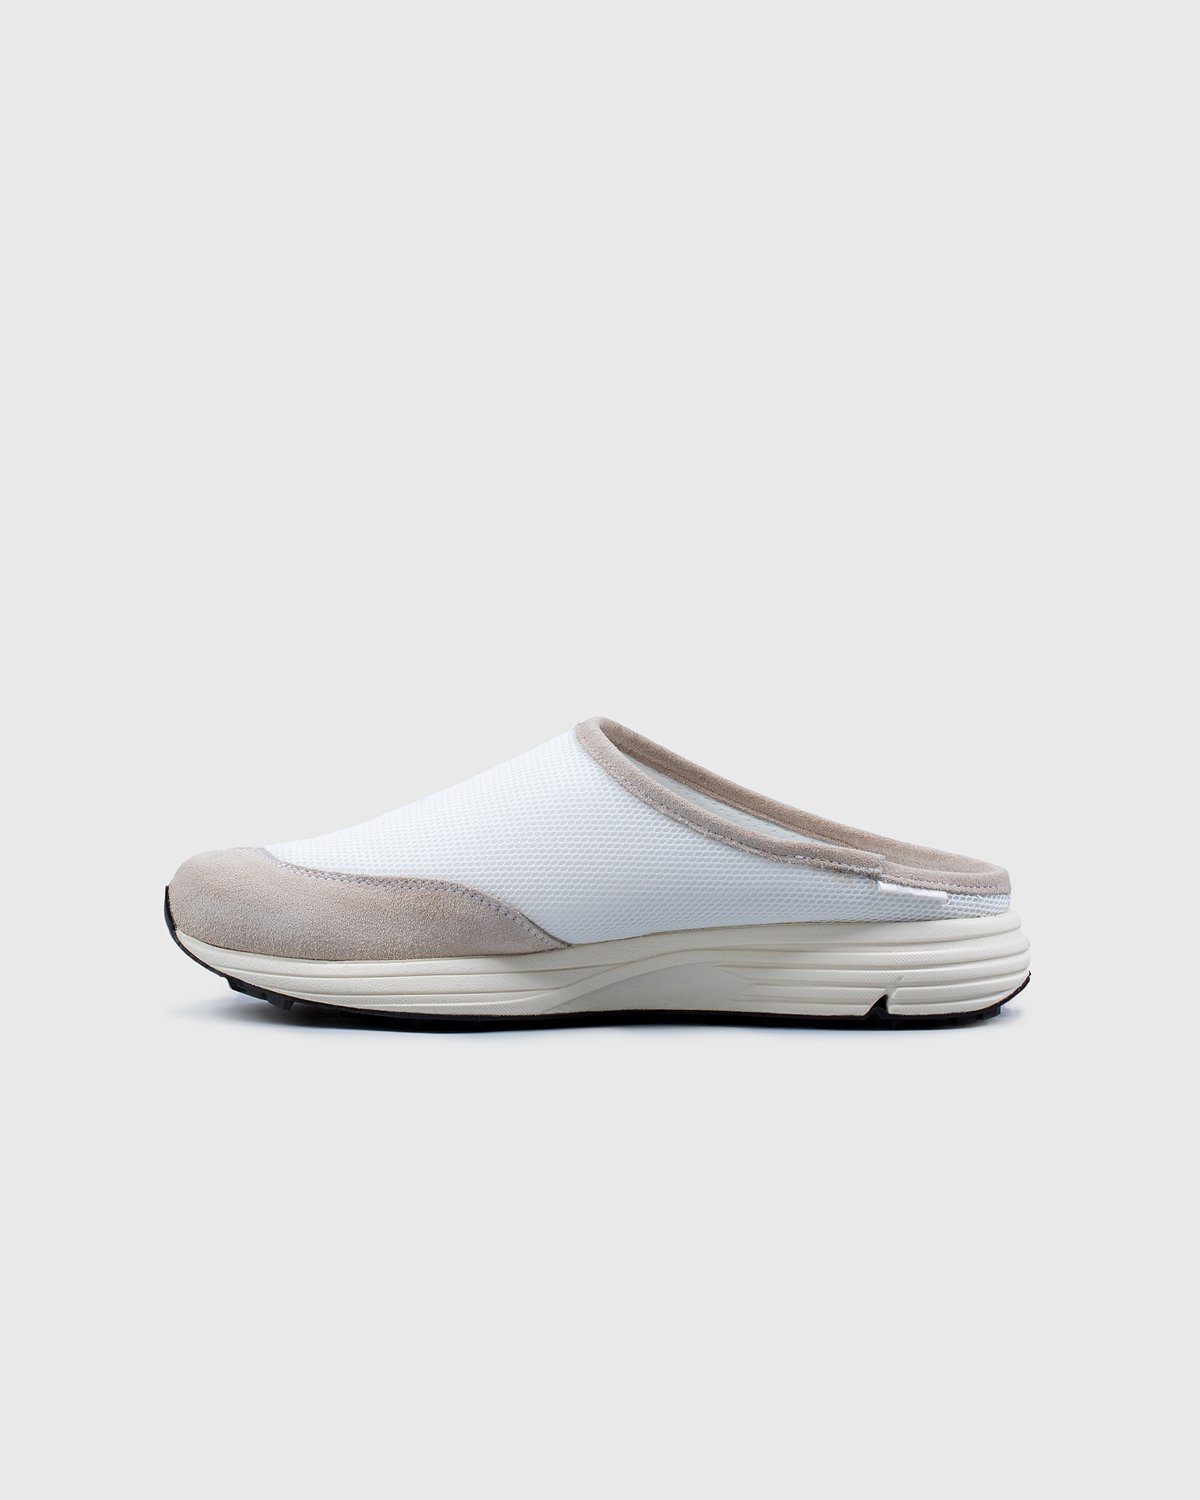 Diemme - Maggiore White Mesh - Footwear - White - Image 4